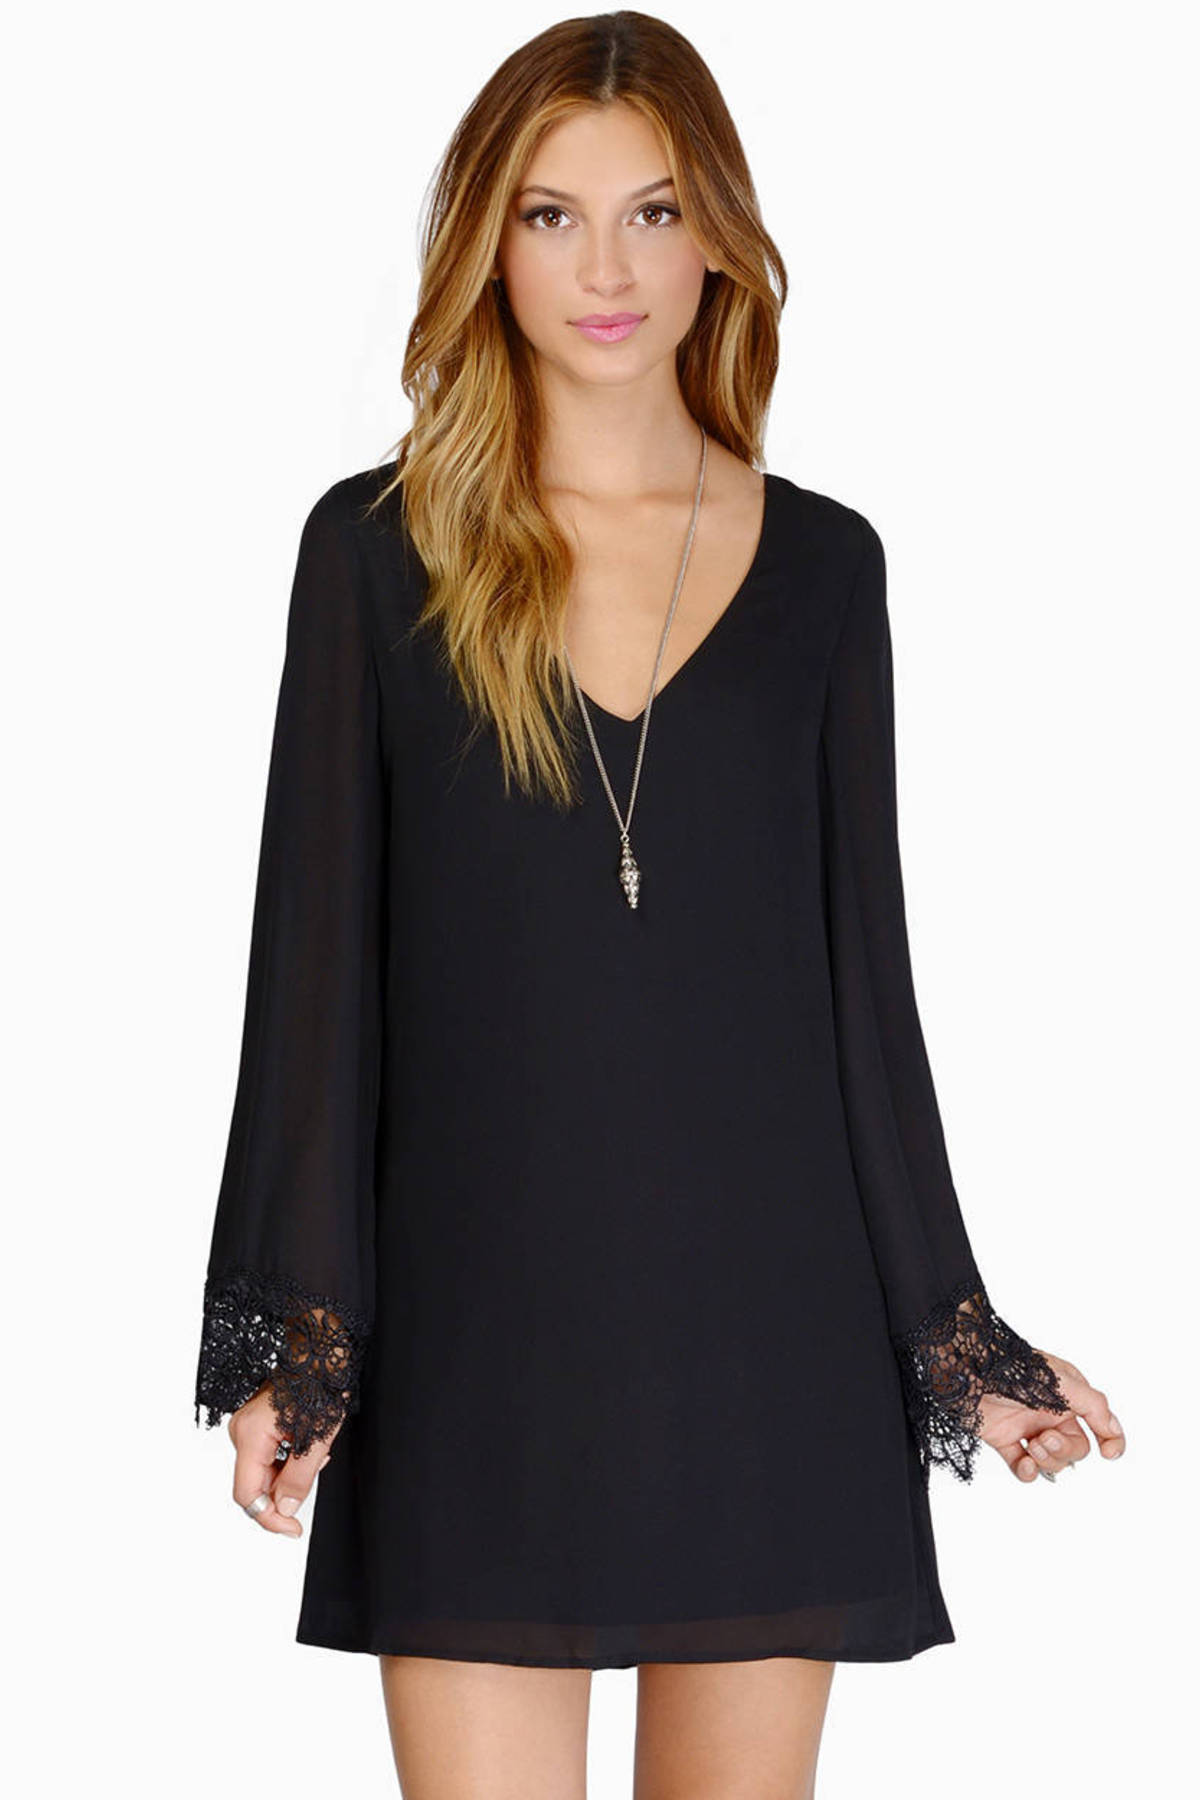 Black Wrap Dress - Lace Trim Long Sleeve Dress - Black V Back Dress